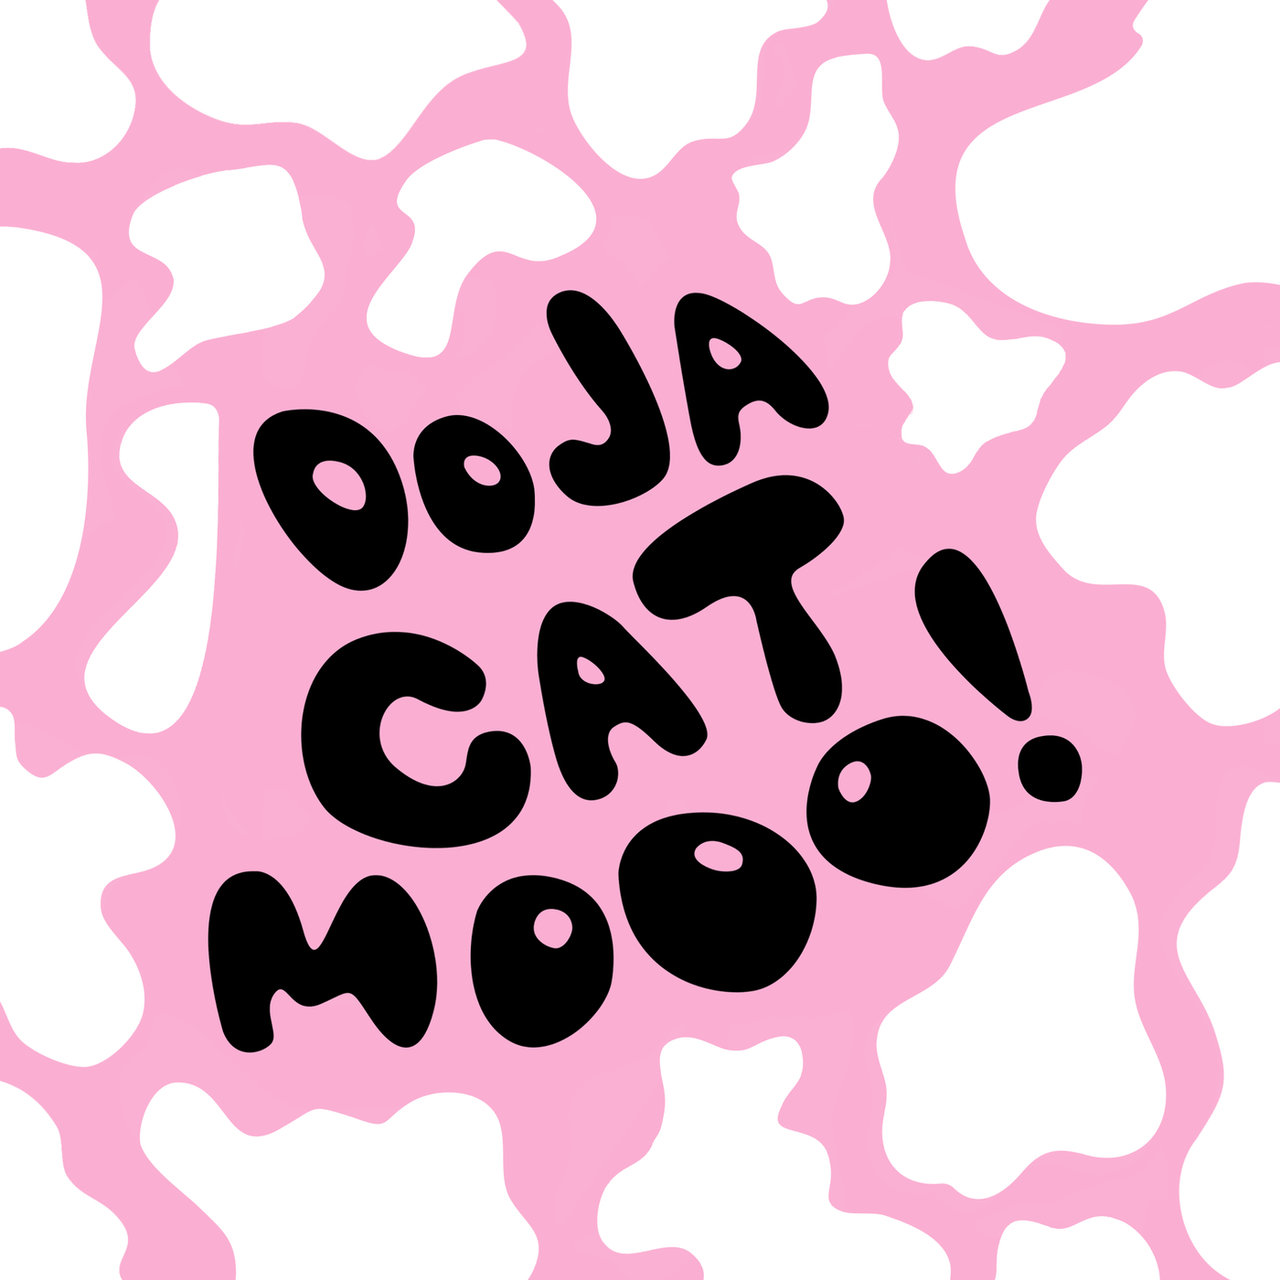 Doja Cat - Mooo! (Cover)